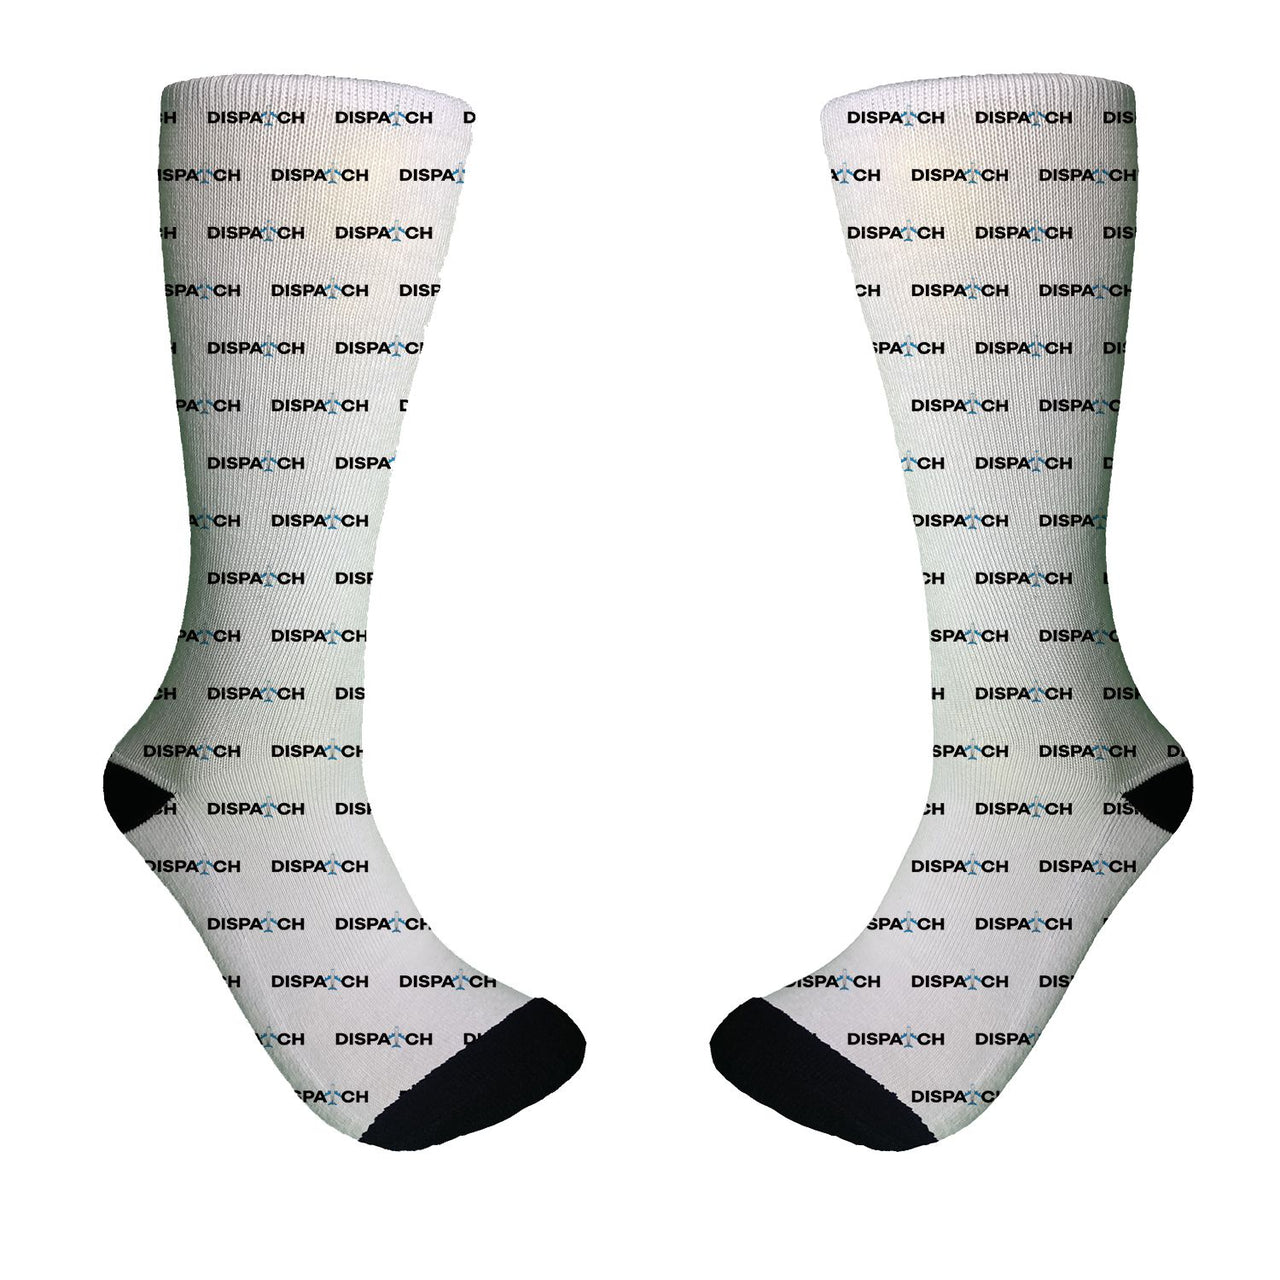 Dispatch Designed Socks